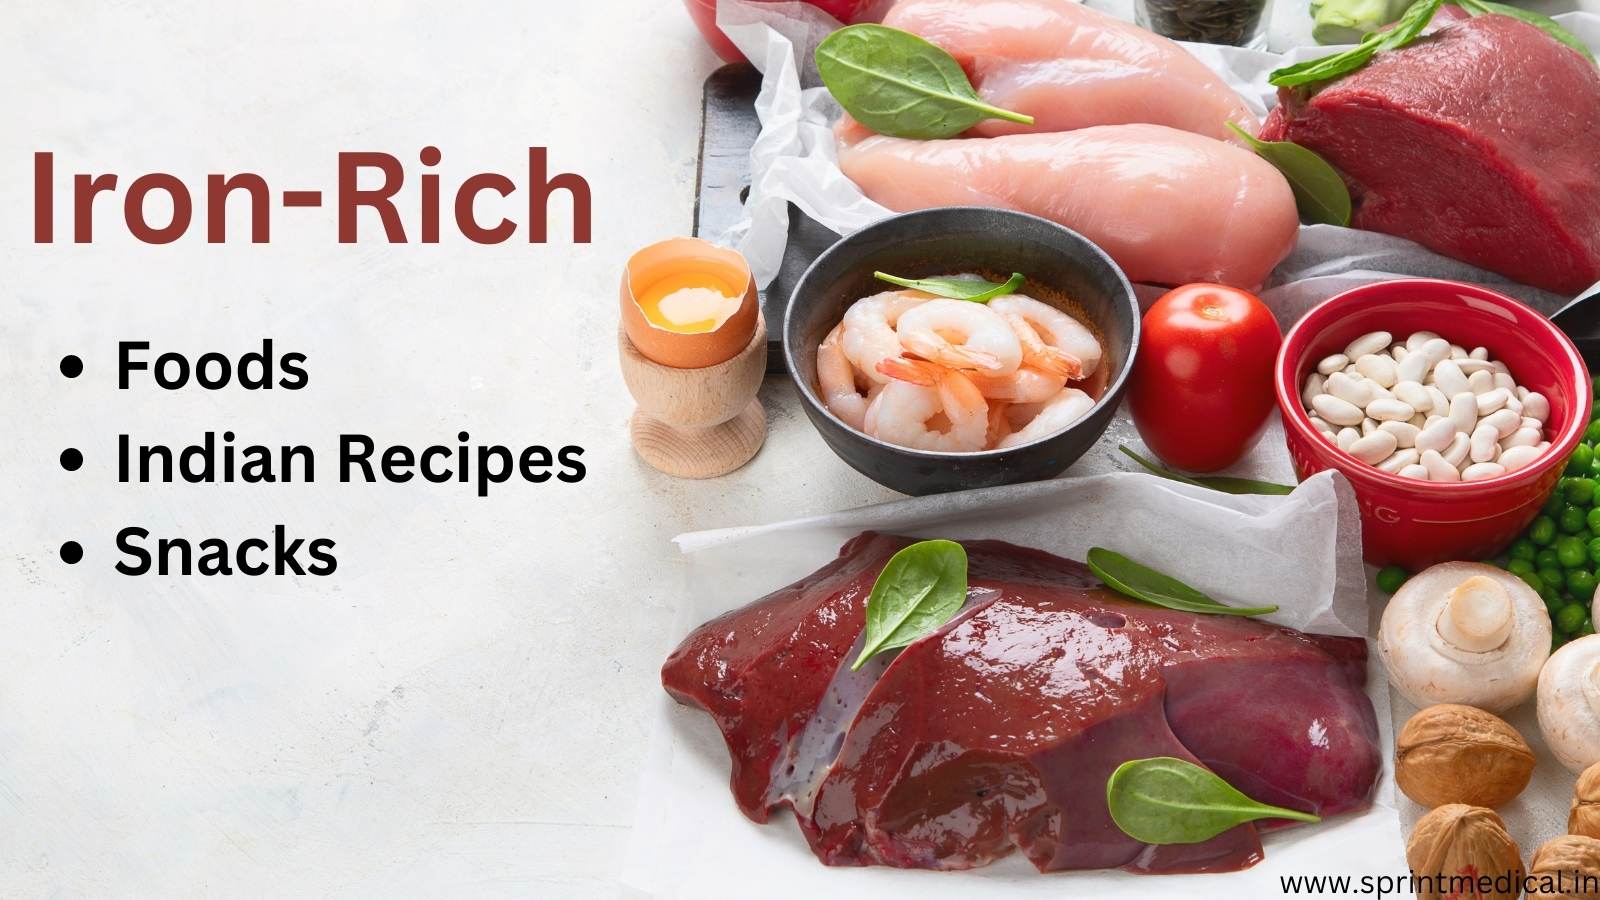 Iron-Rich foods